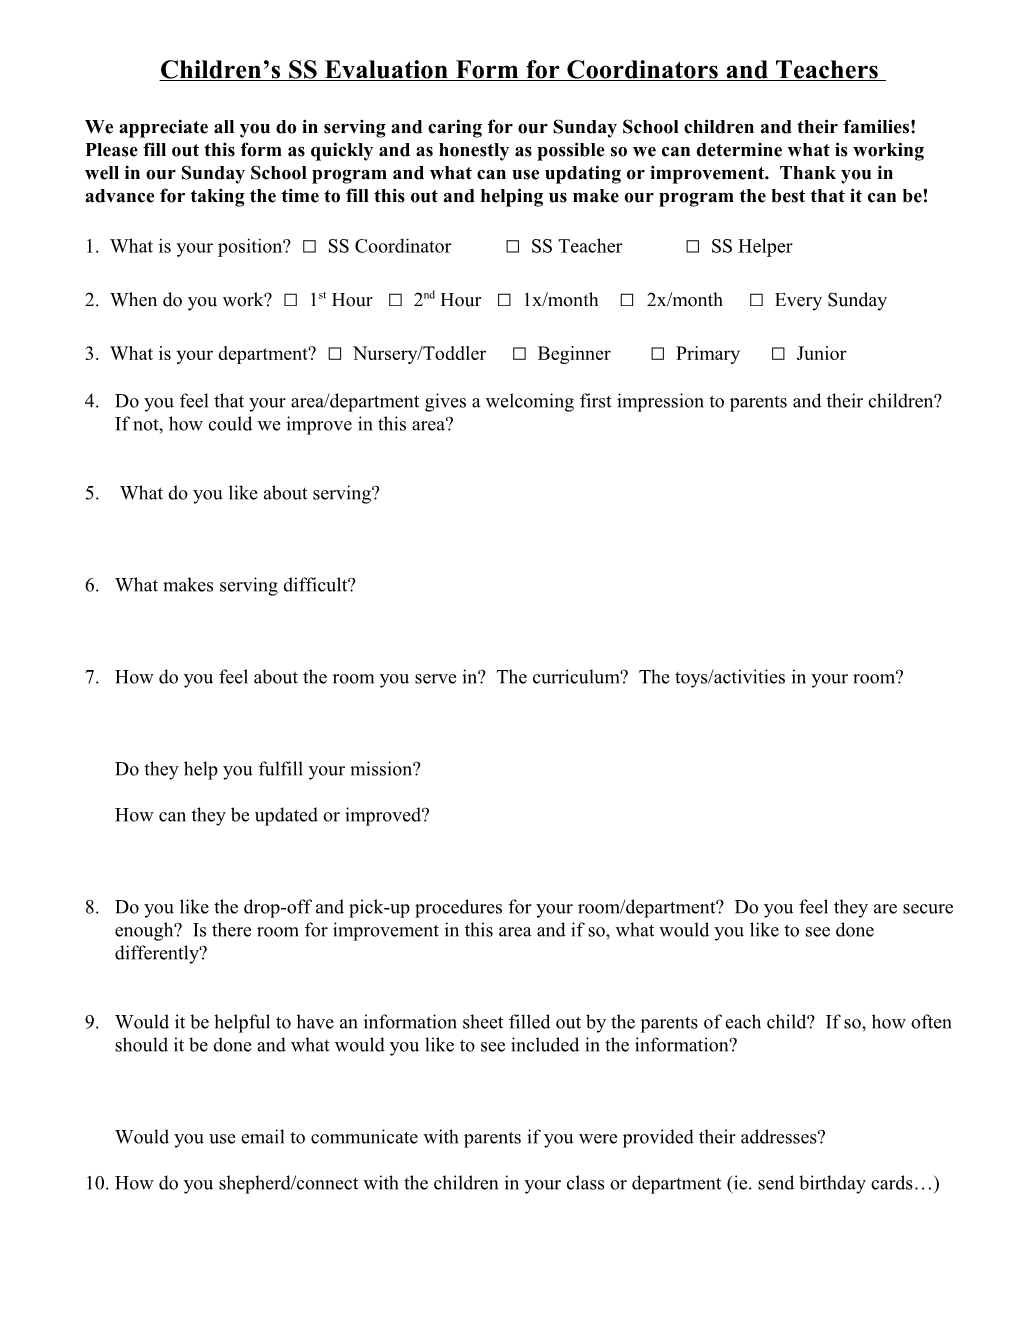 Evaluation Form for Children S SS Teachers and Coordinators